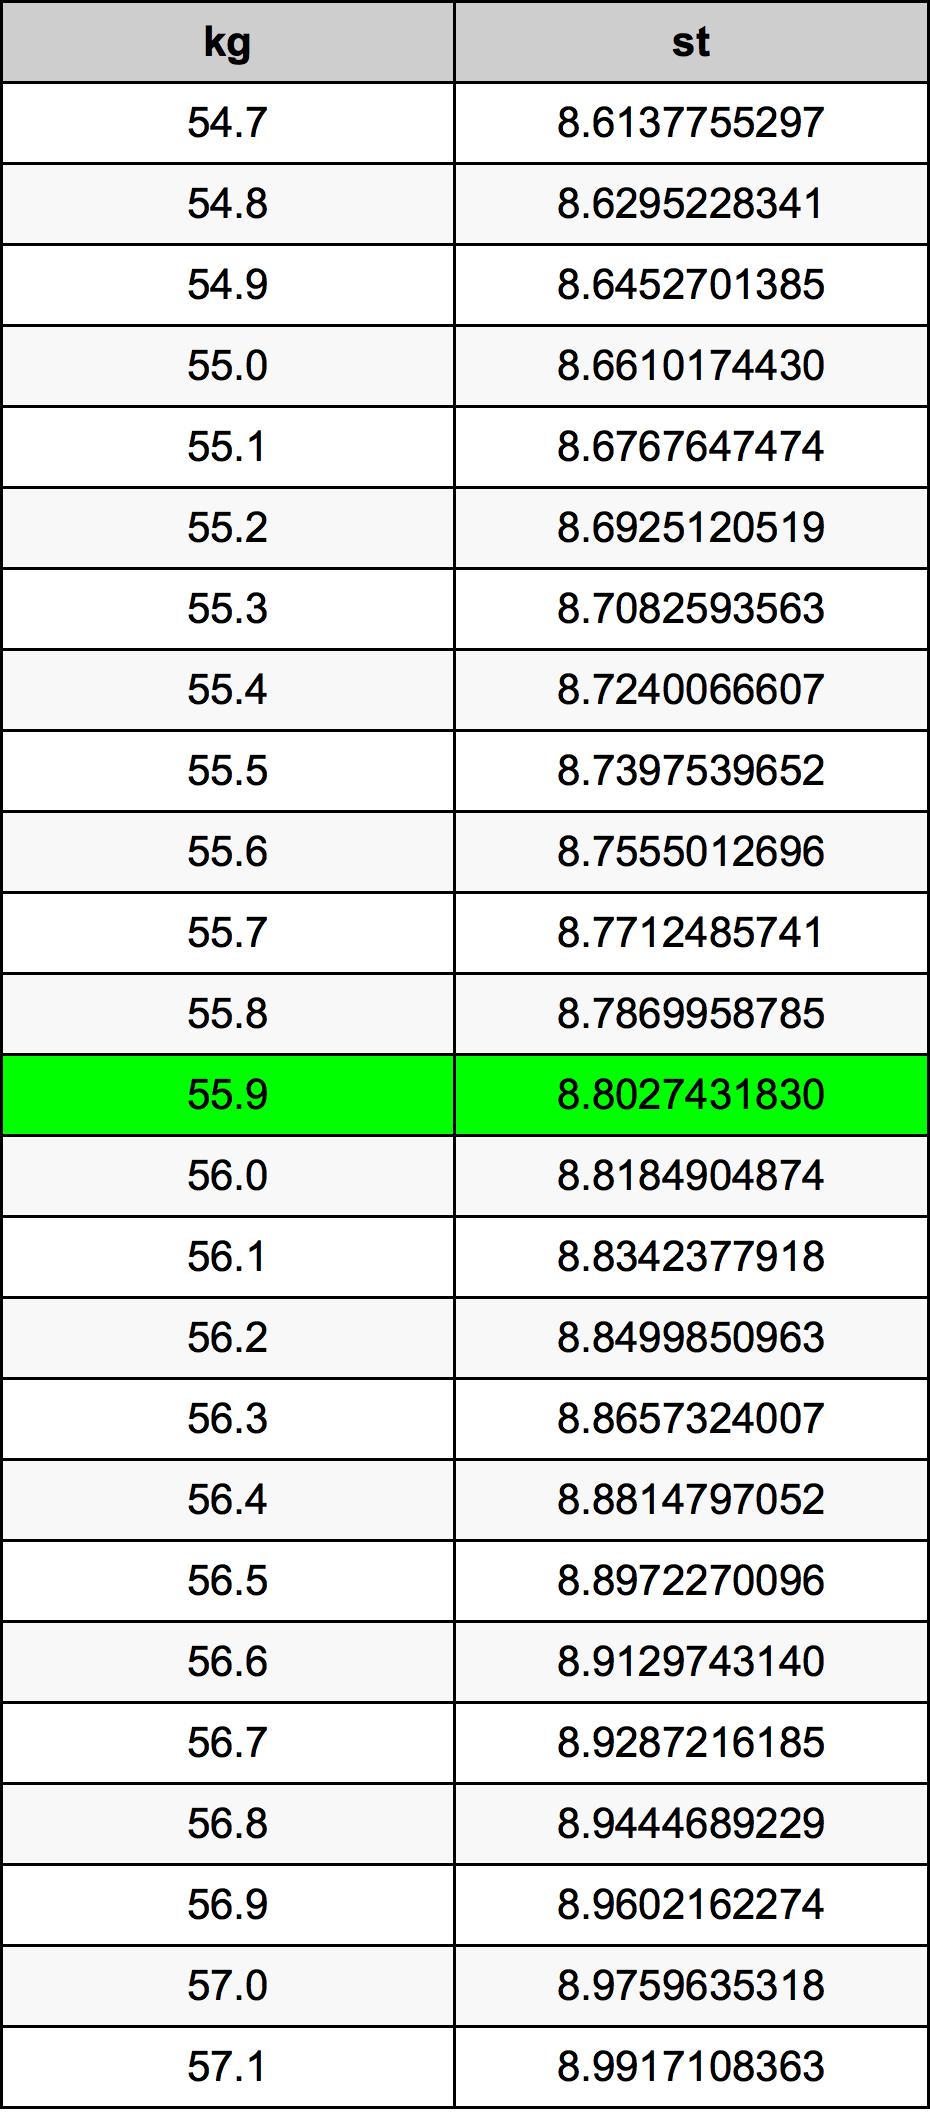 55.9 Kilogramma konverżjoni tabella